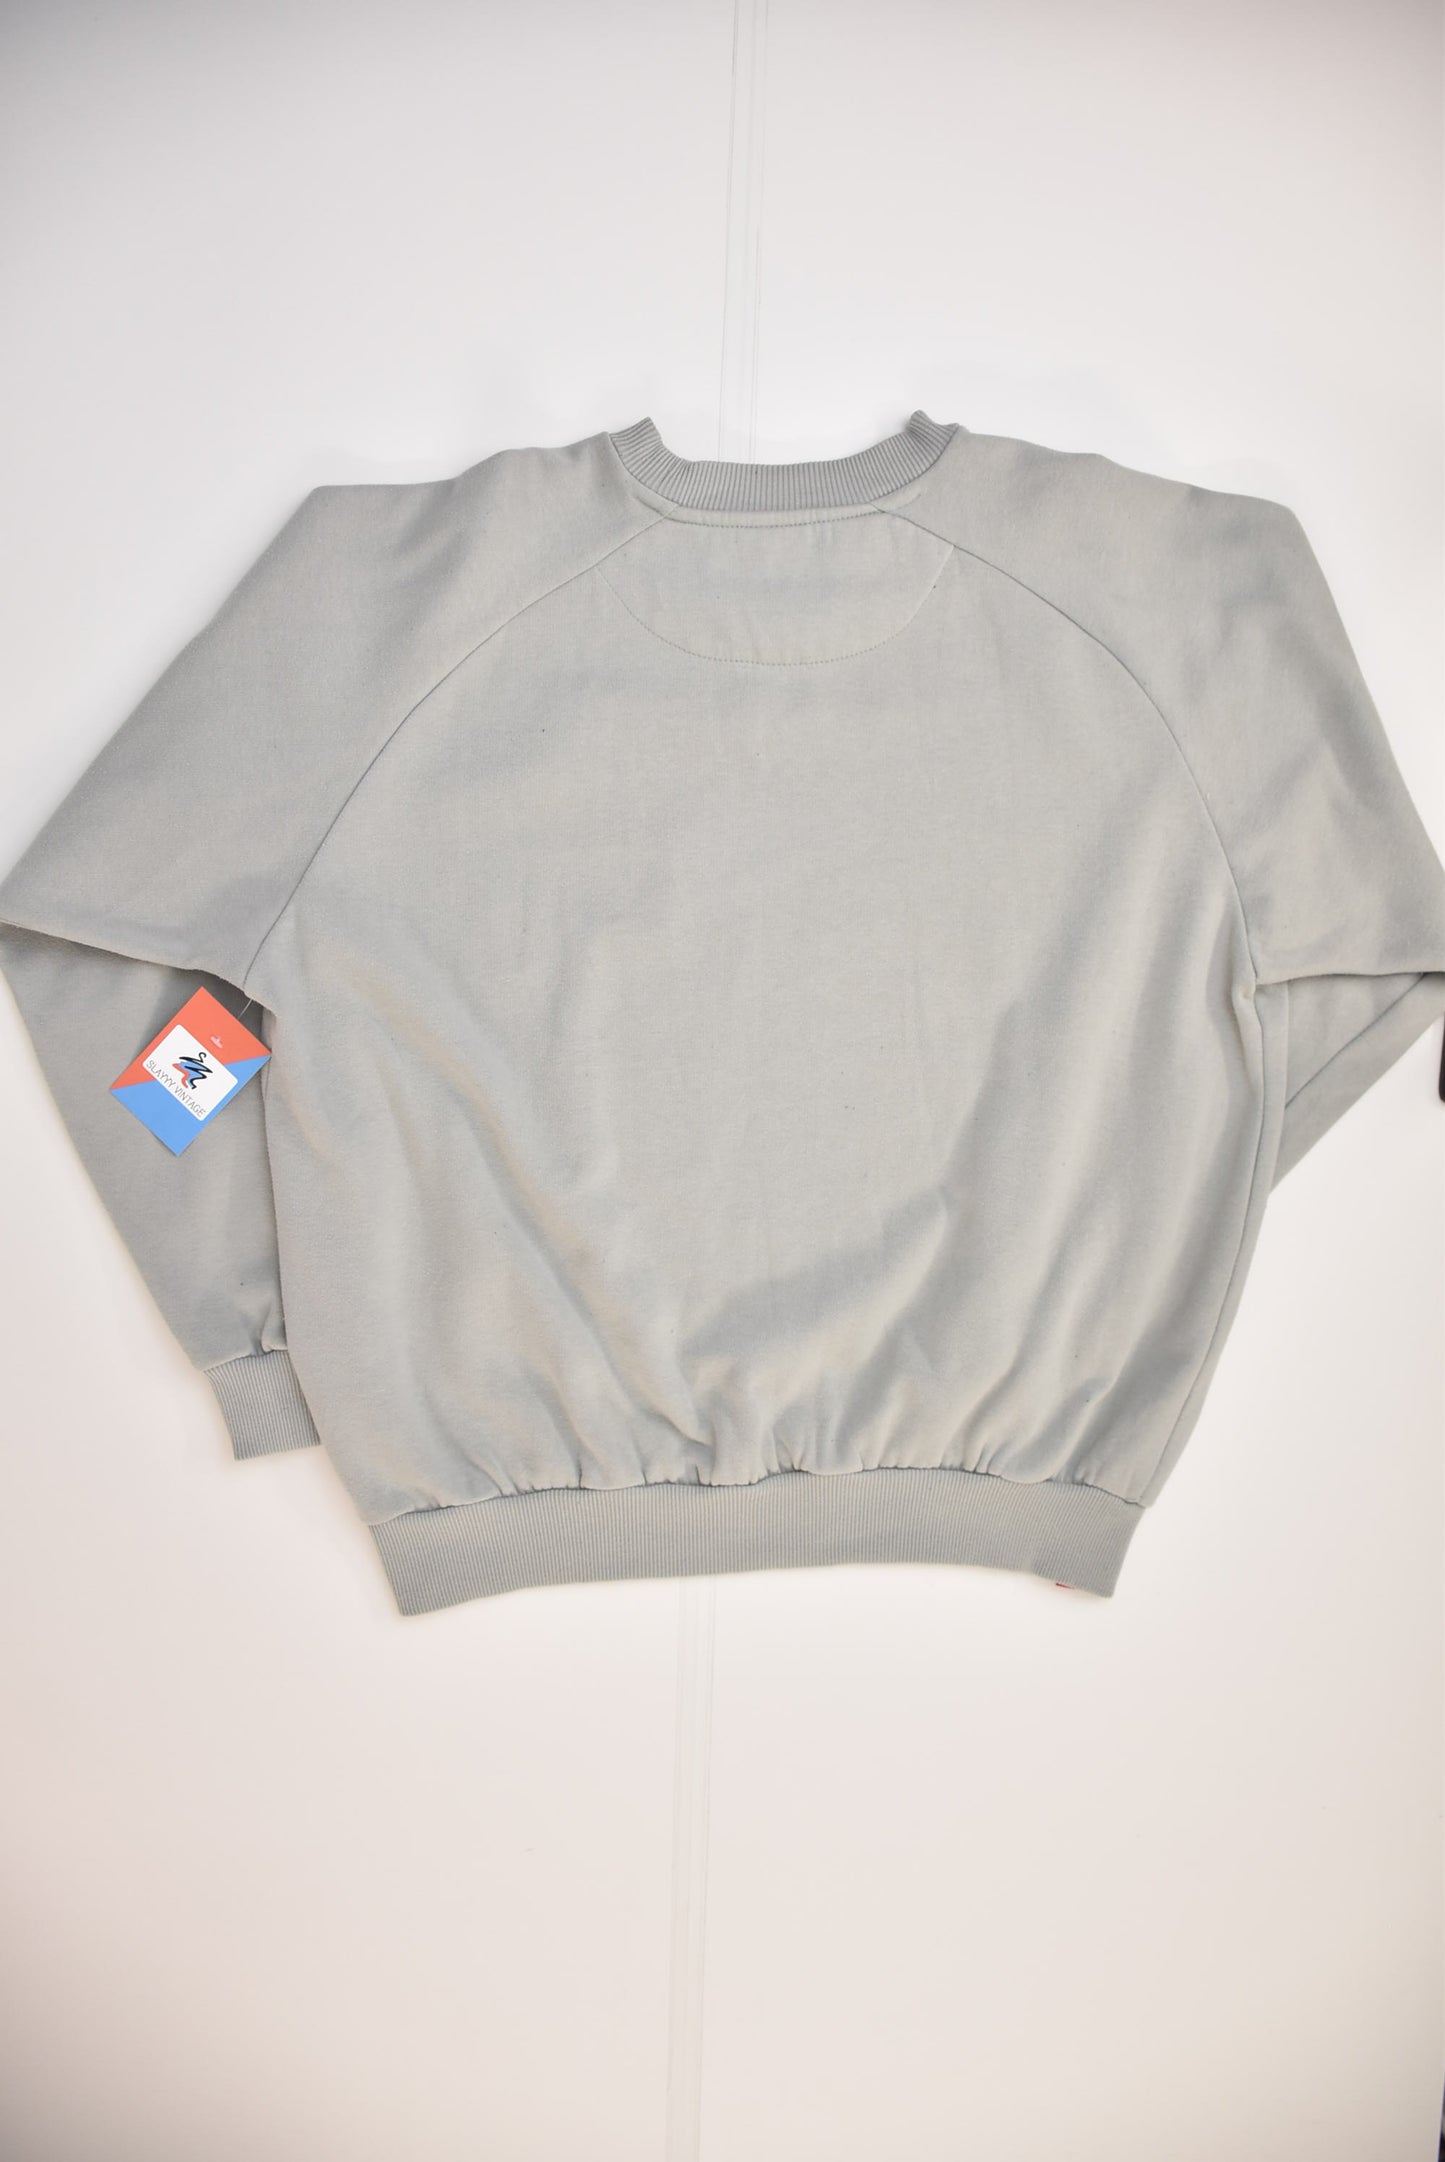 Umbro Sweatshirt (M/L)